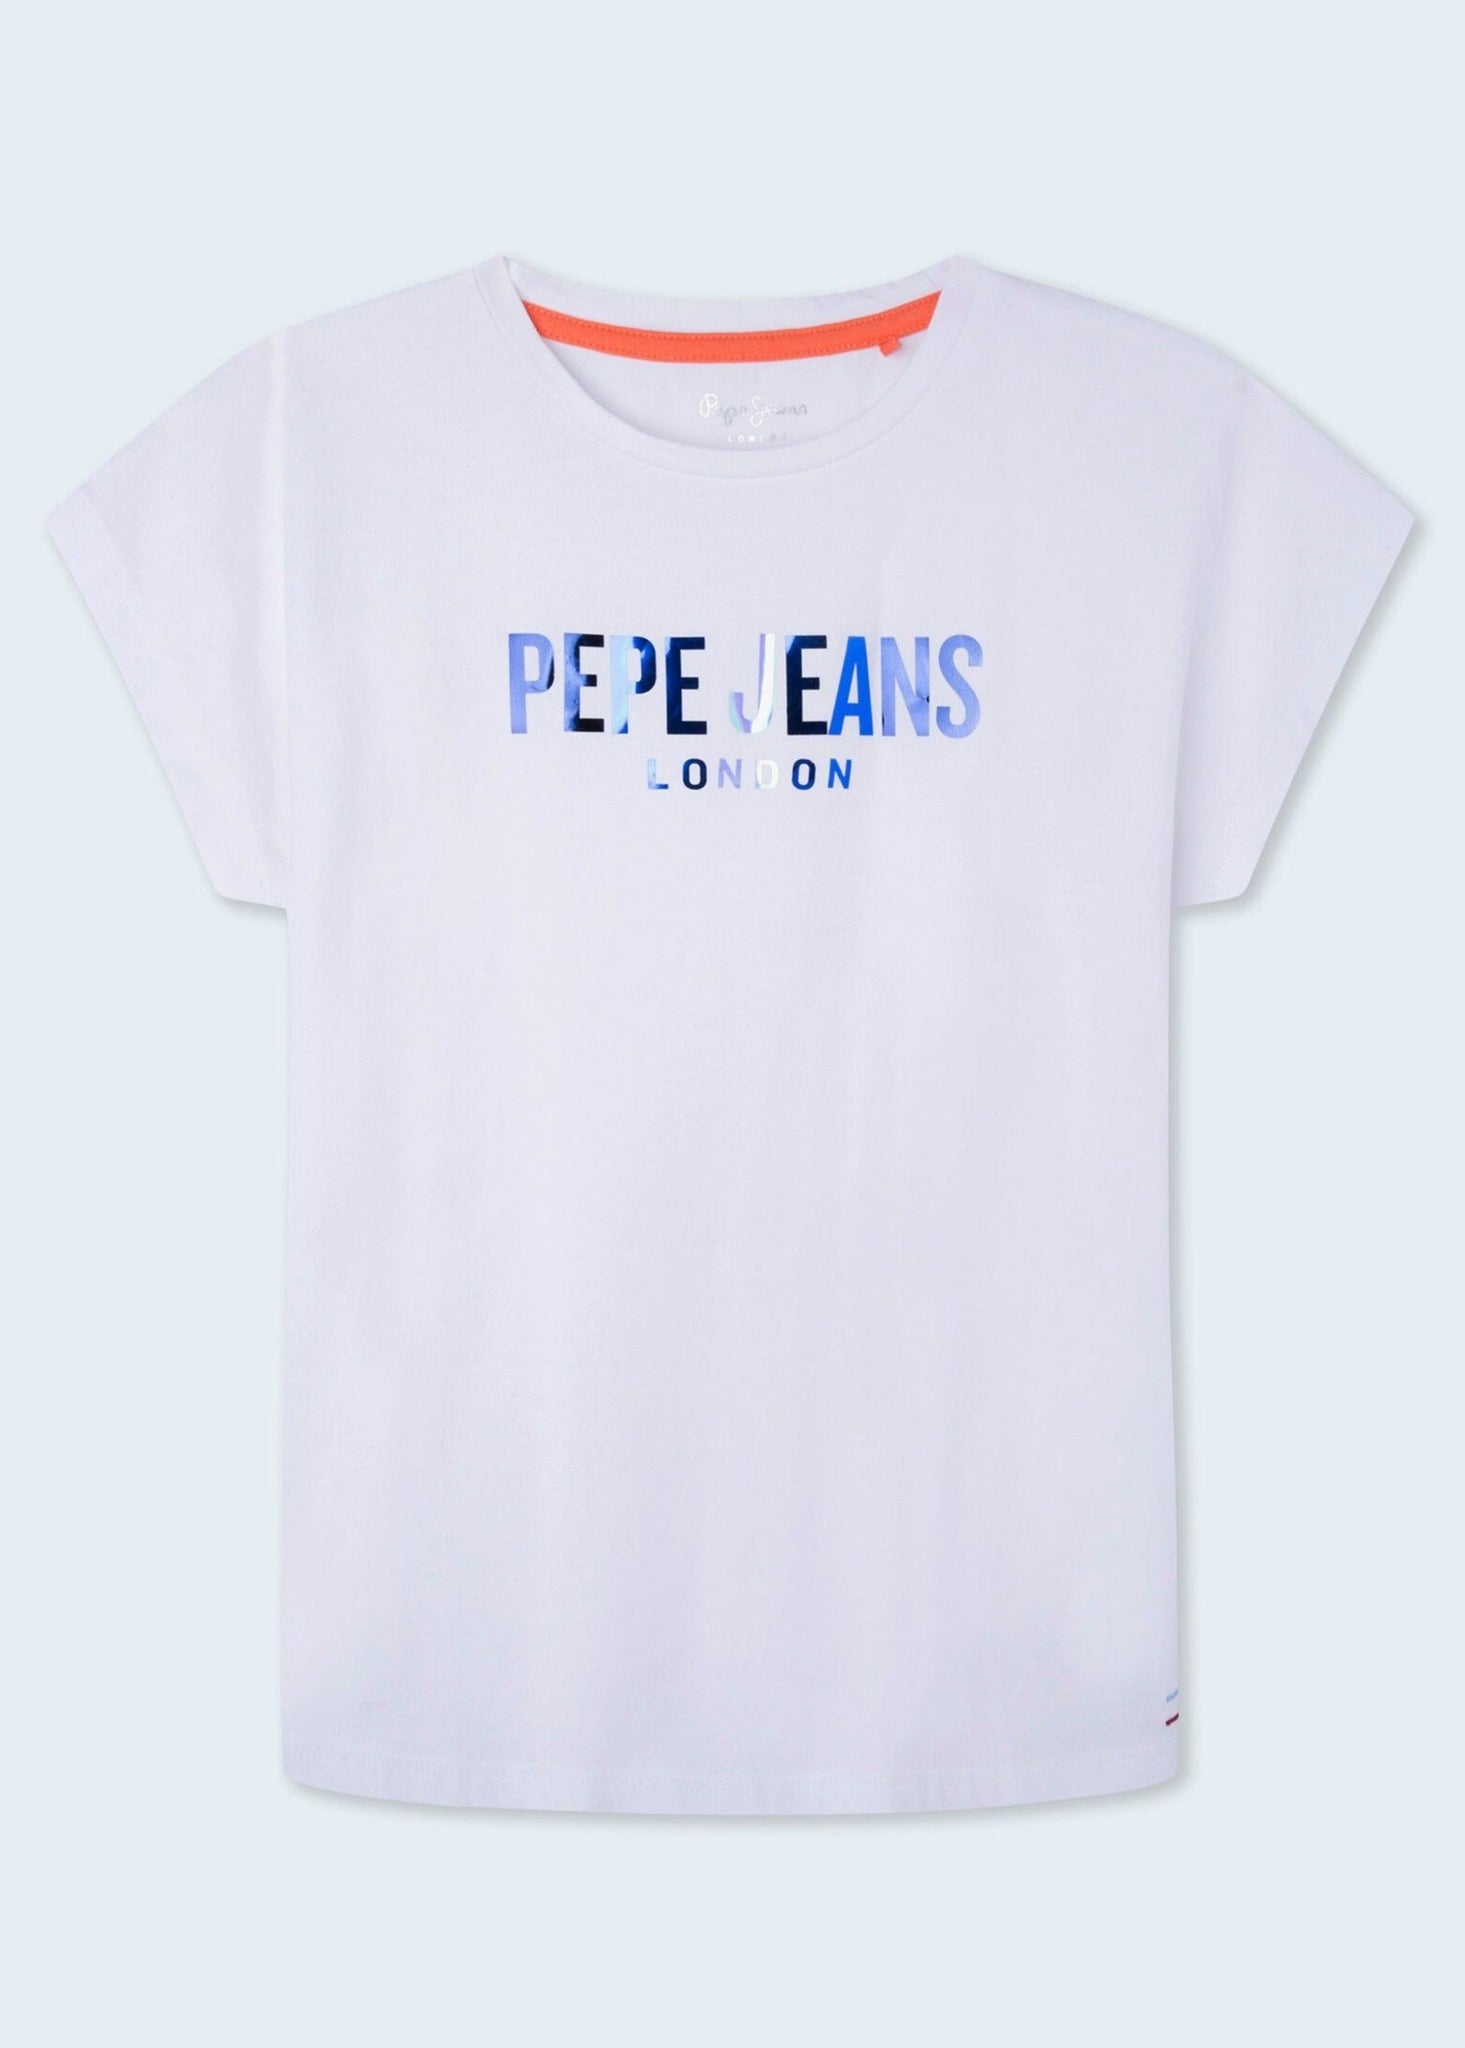 Pepe Jeans PG502850-800 Koszulka HOLLY junior dziewczyna WHITE